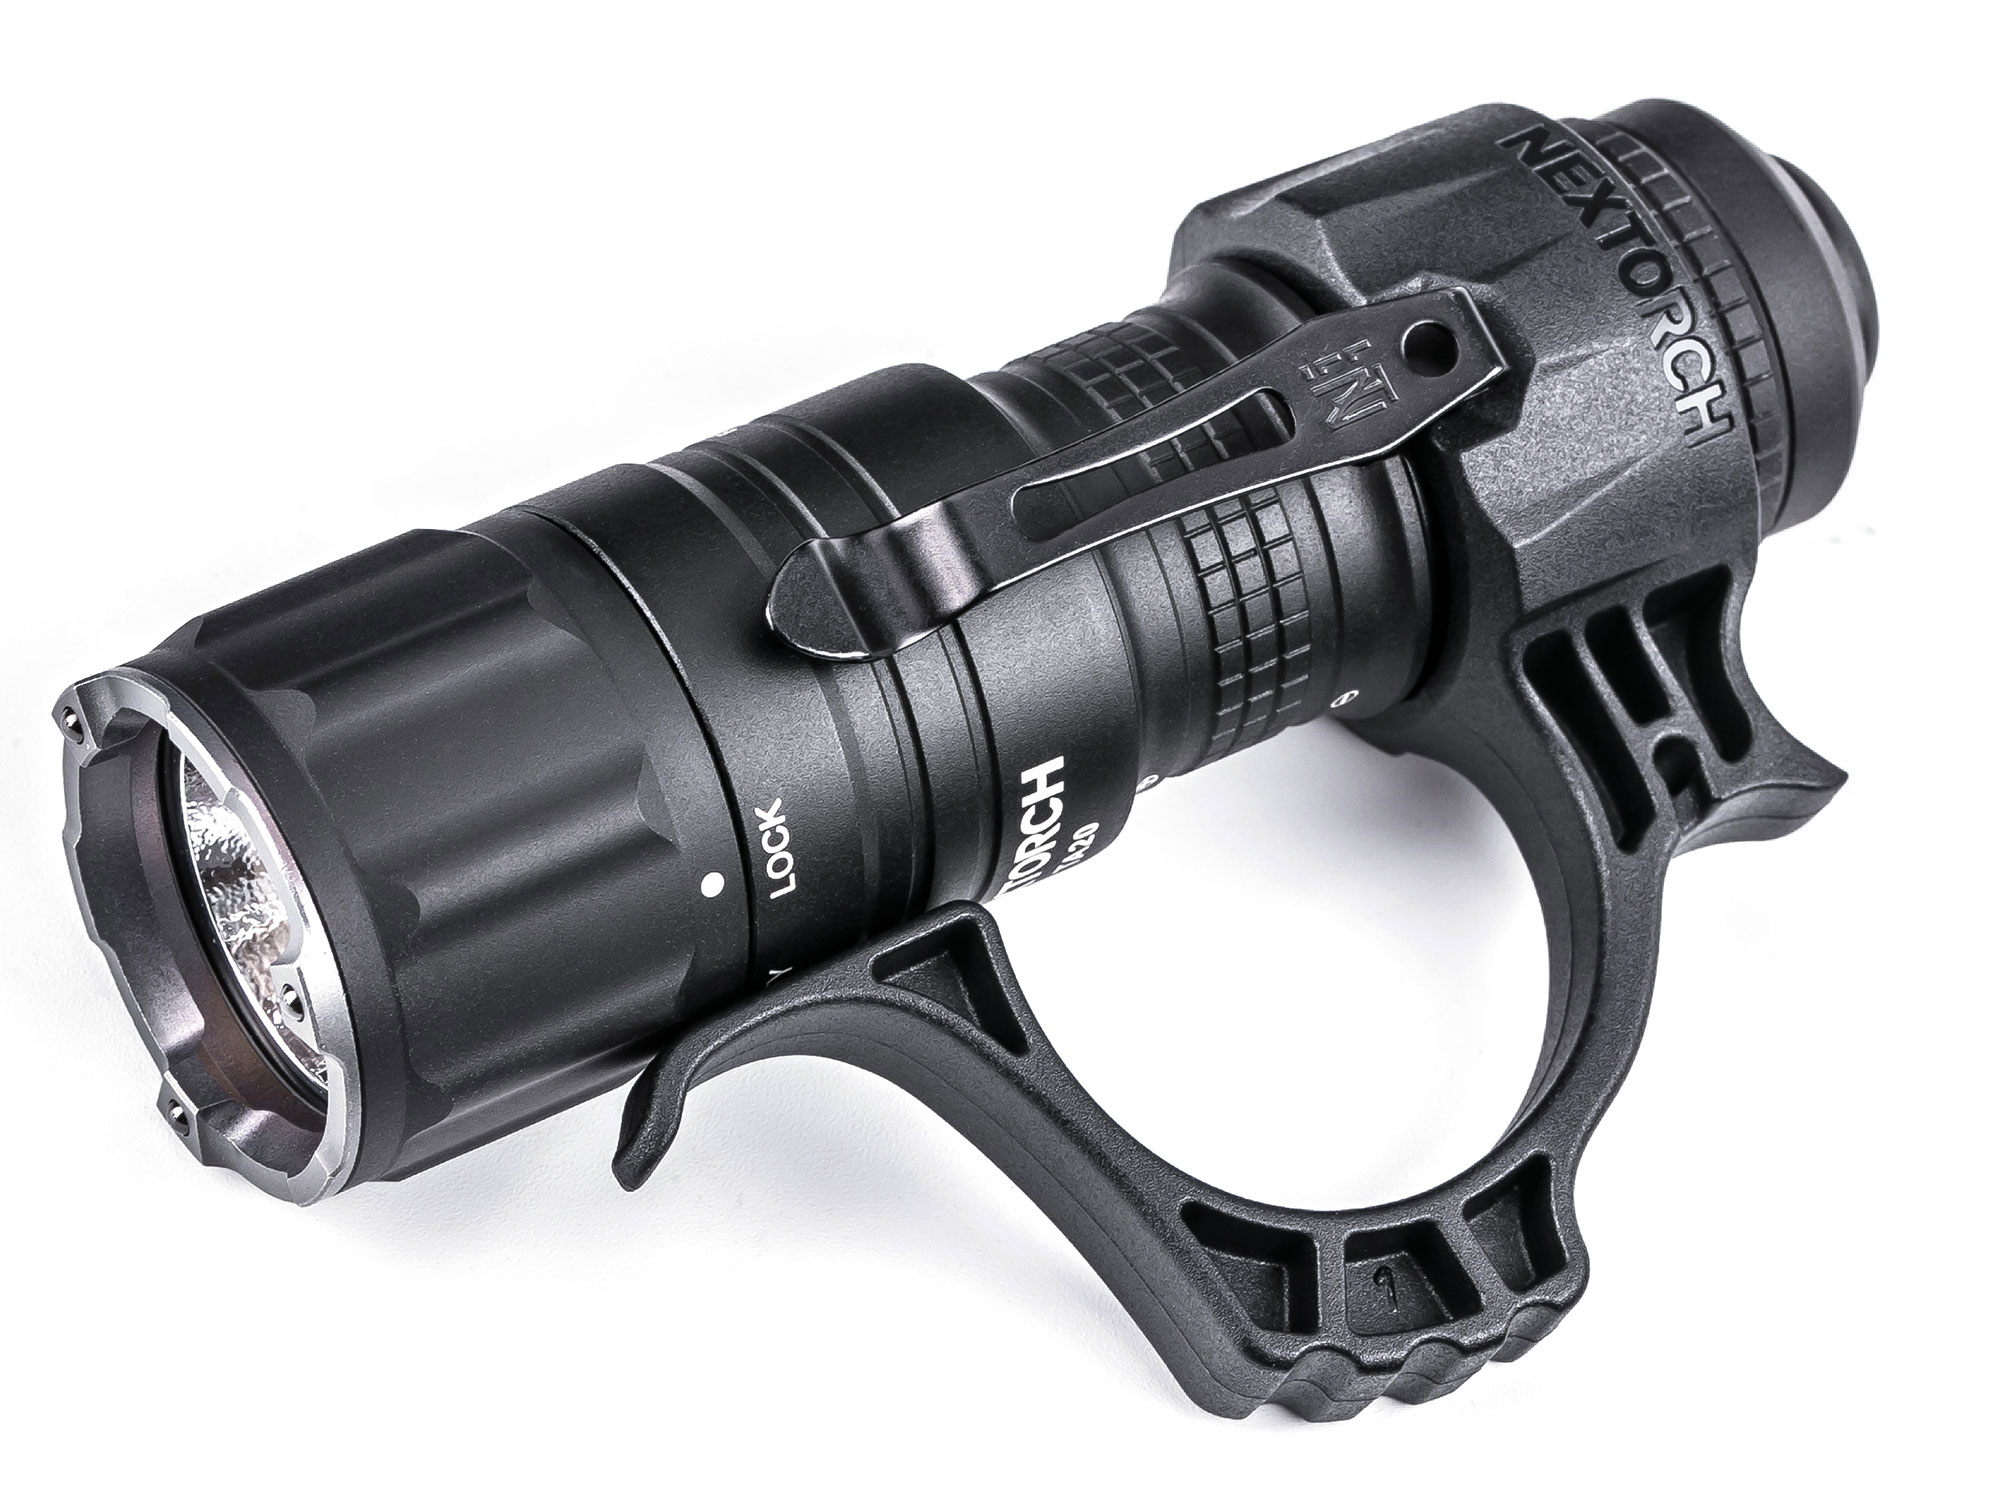 Nextorch flashlight TA20 1000 lumens | Recon Company